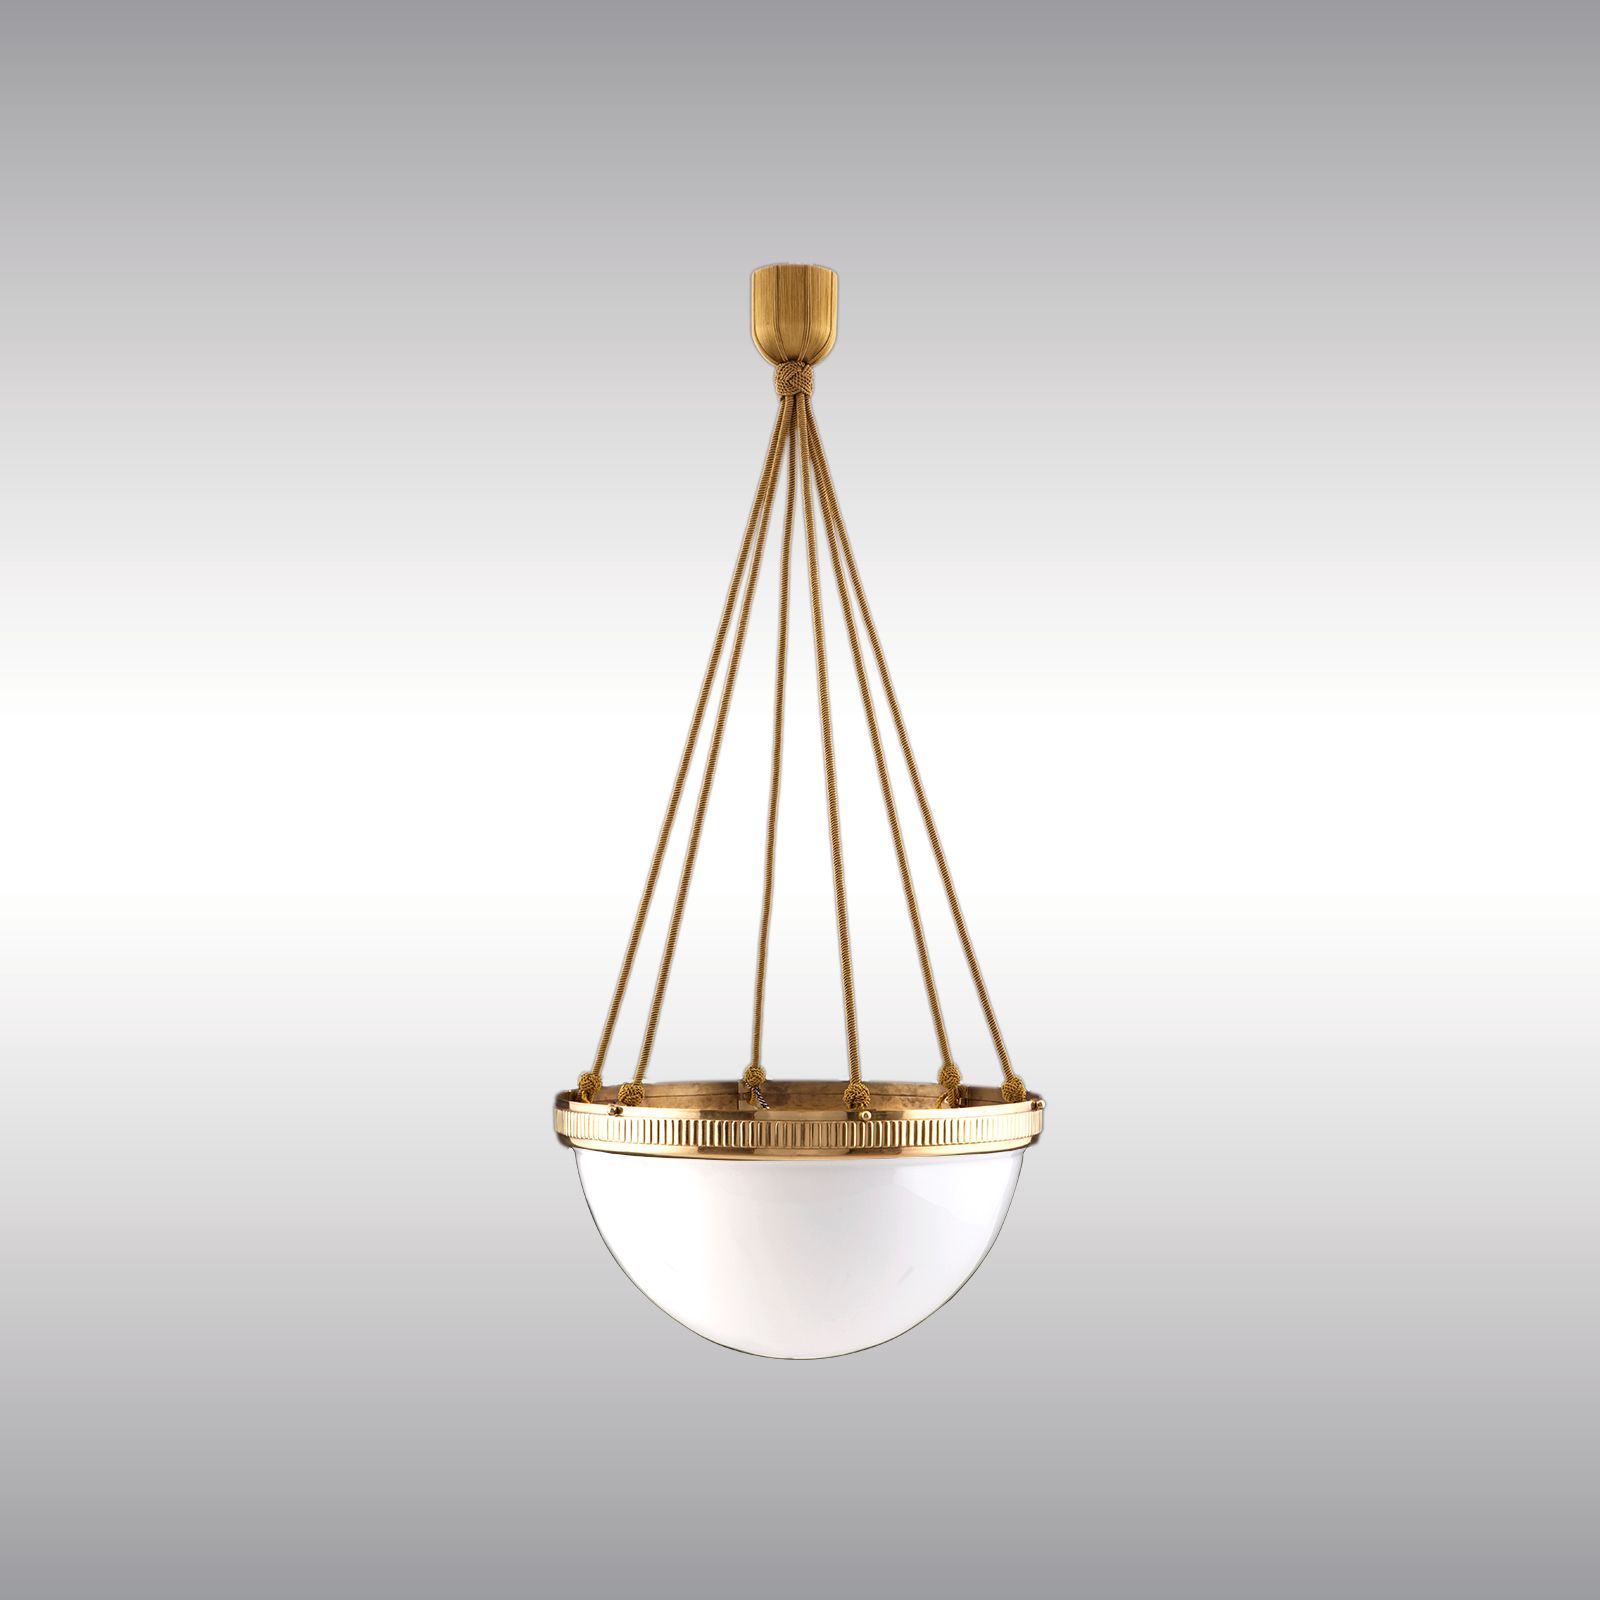 WOKA LAMPS VIENNA - OrderNr.: 22308|Elpos2 - Design: WOKA